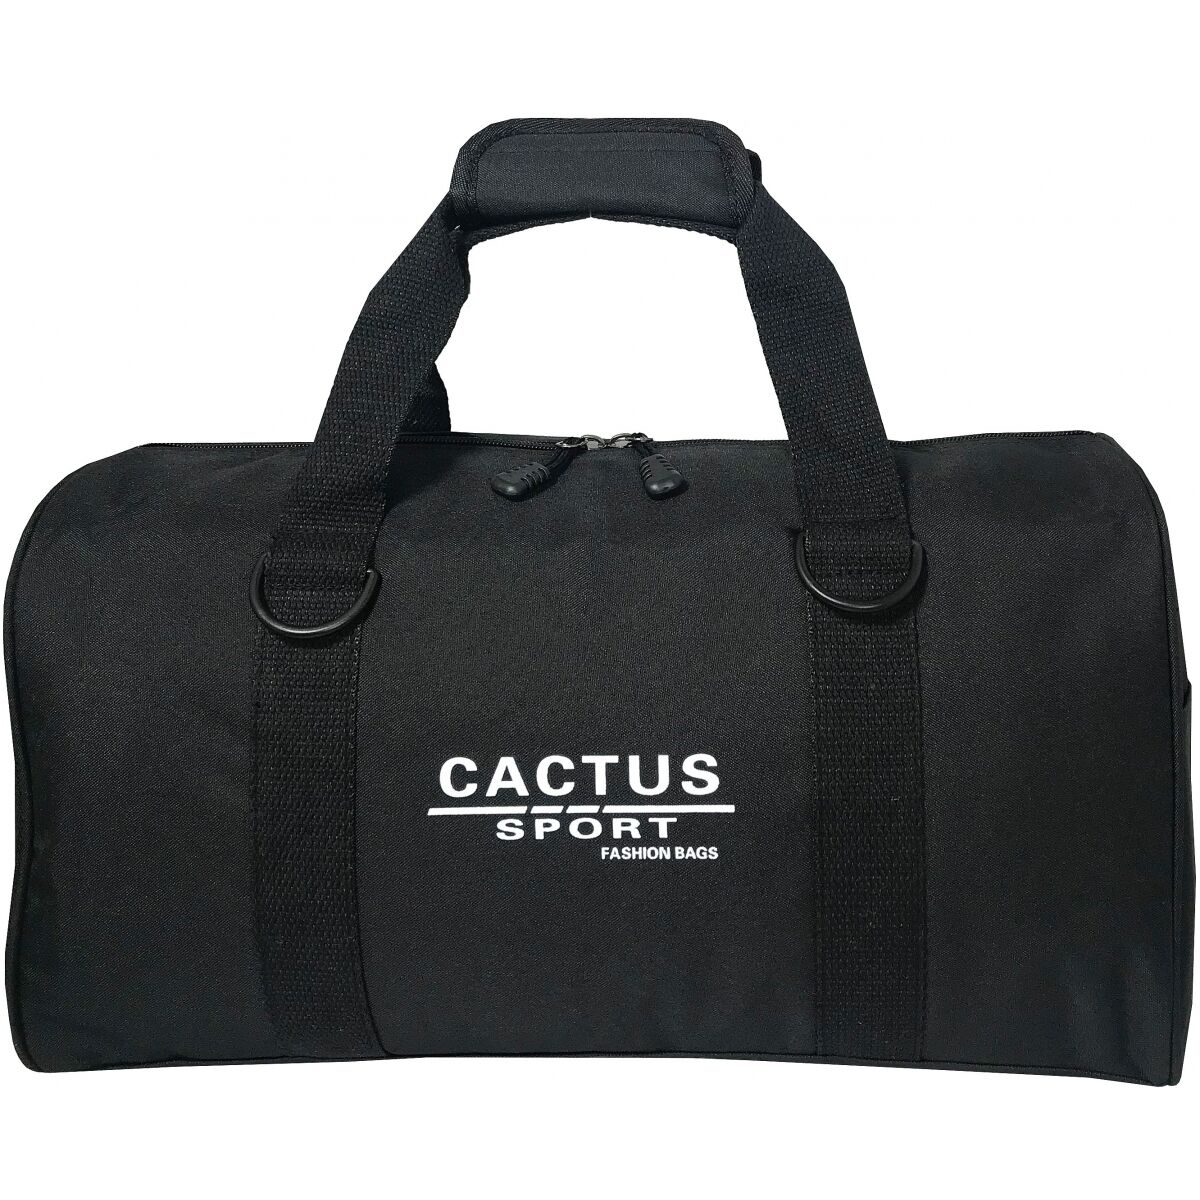 Cactus Sac de Sport 48h CACTUS - NOIR